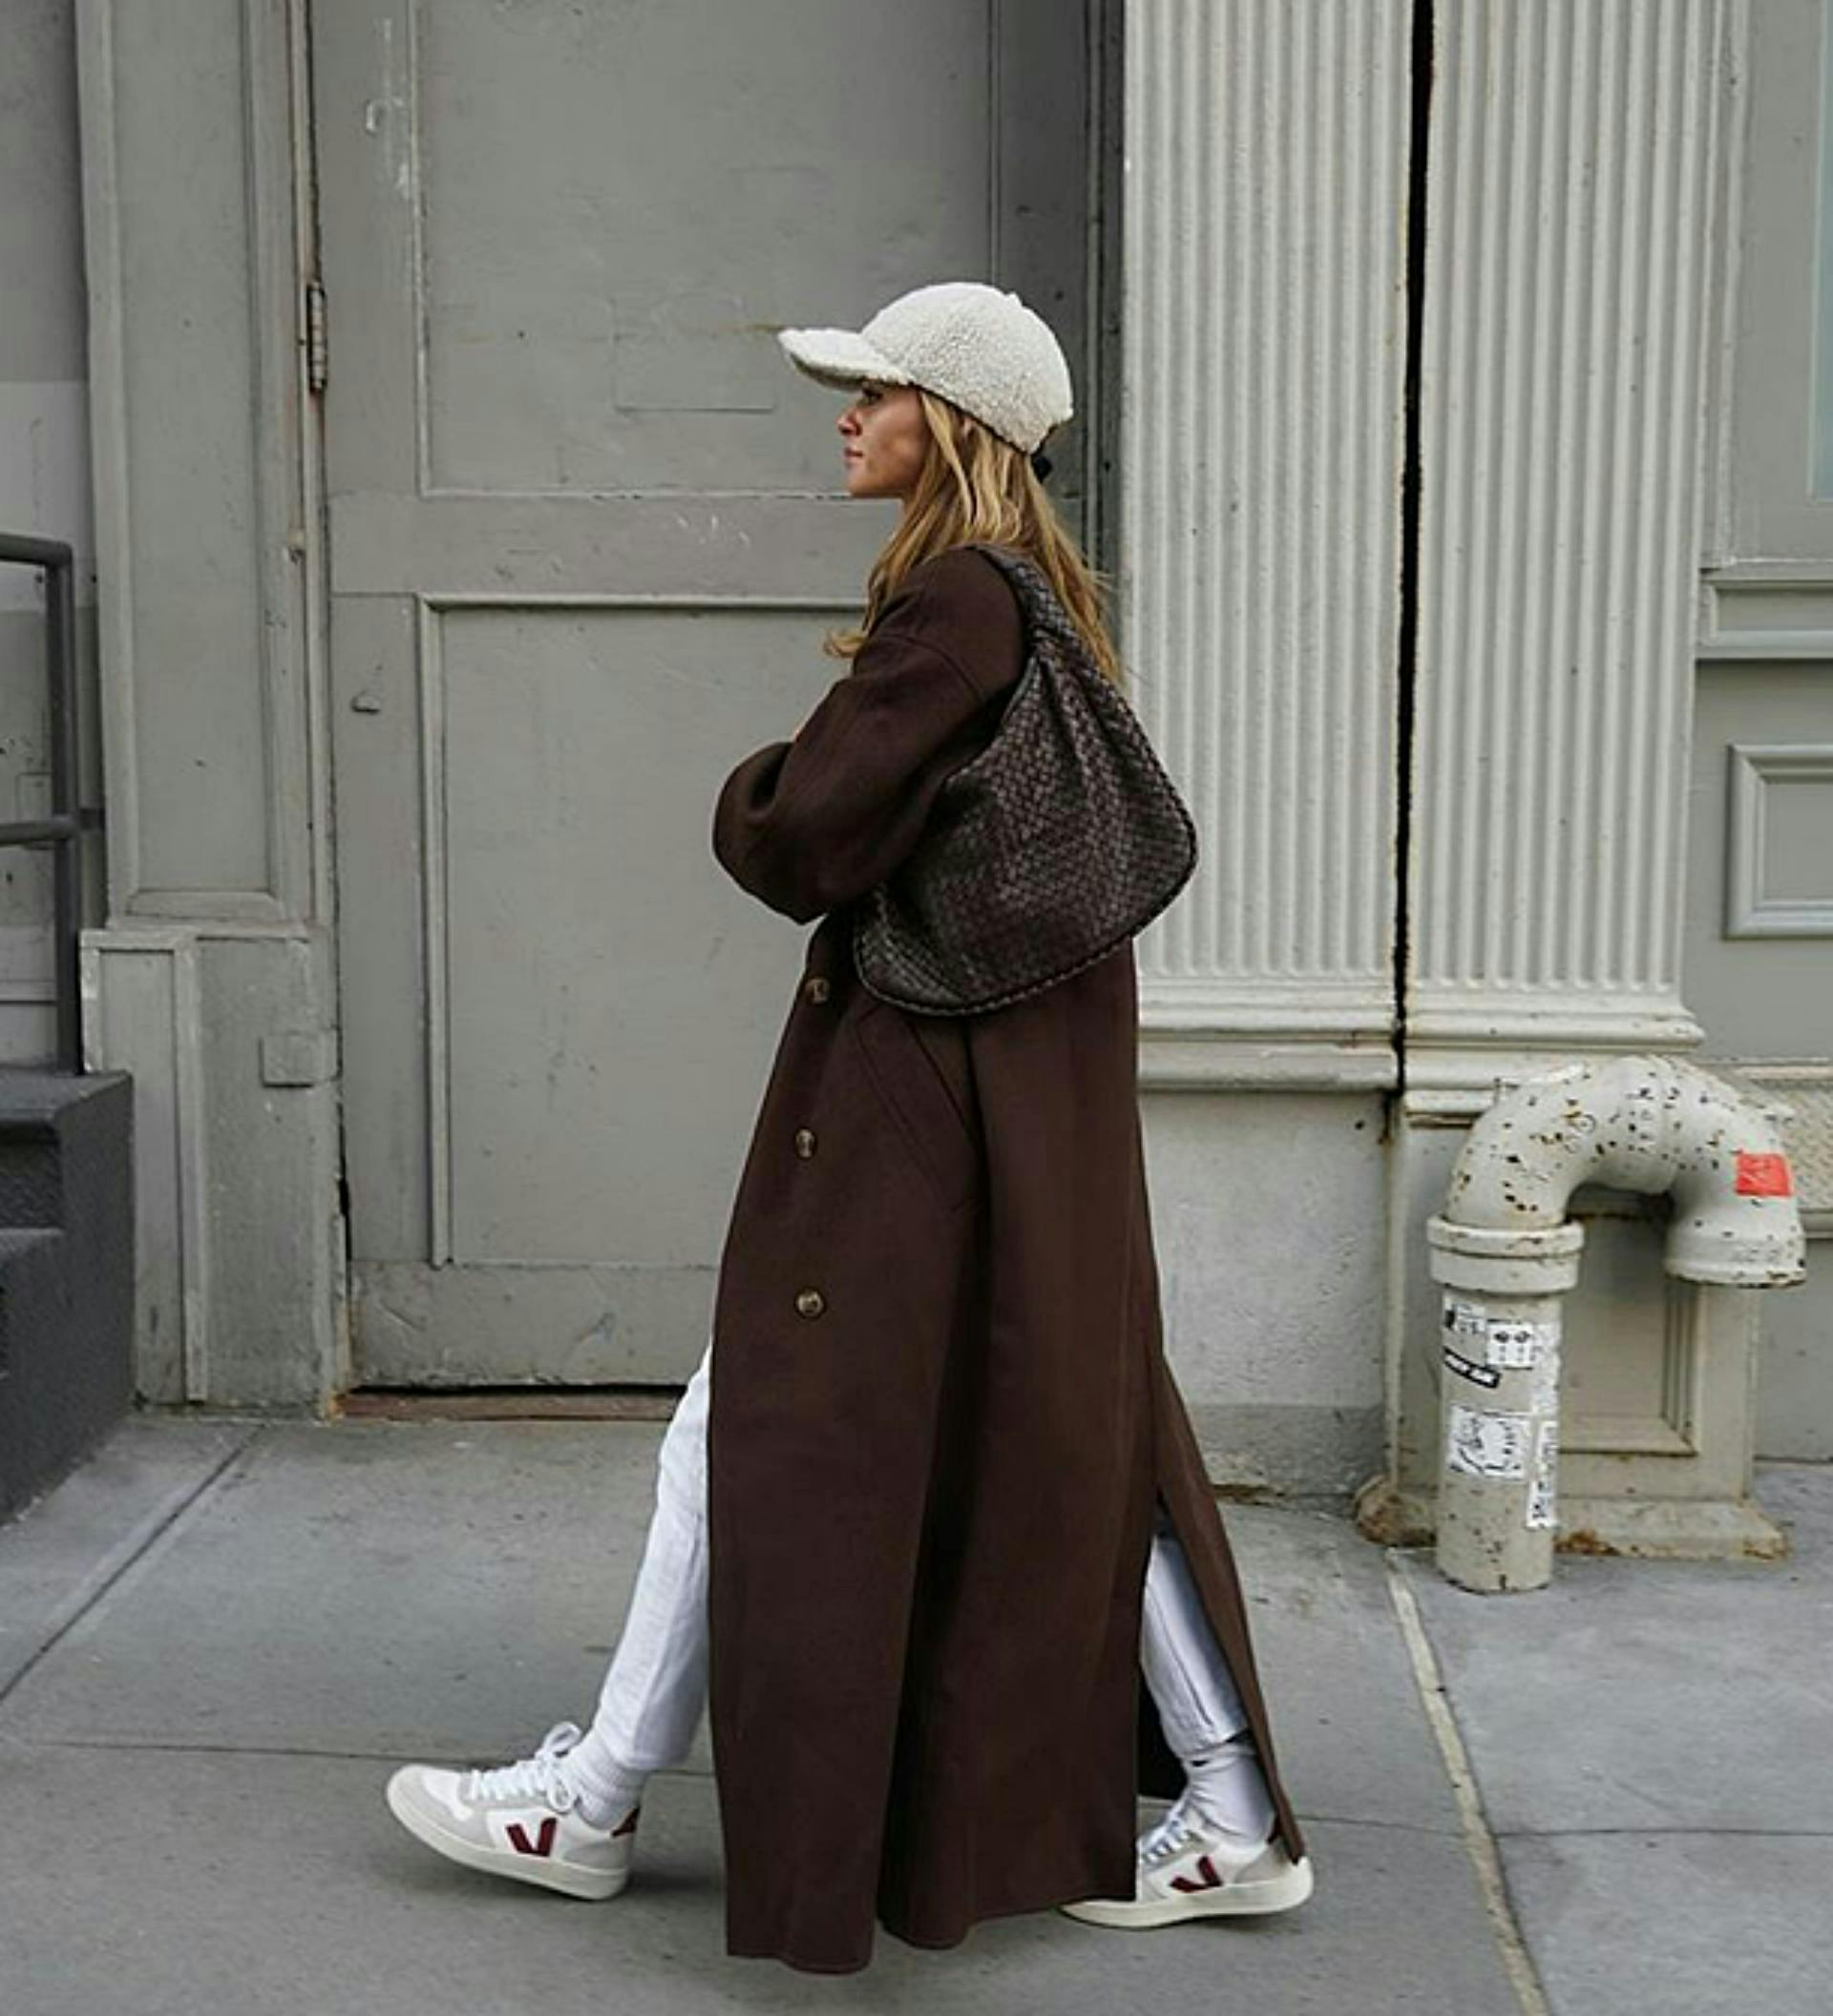 clothing apparel shoe footwear person human overcoat coat